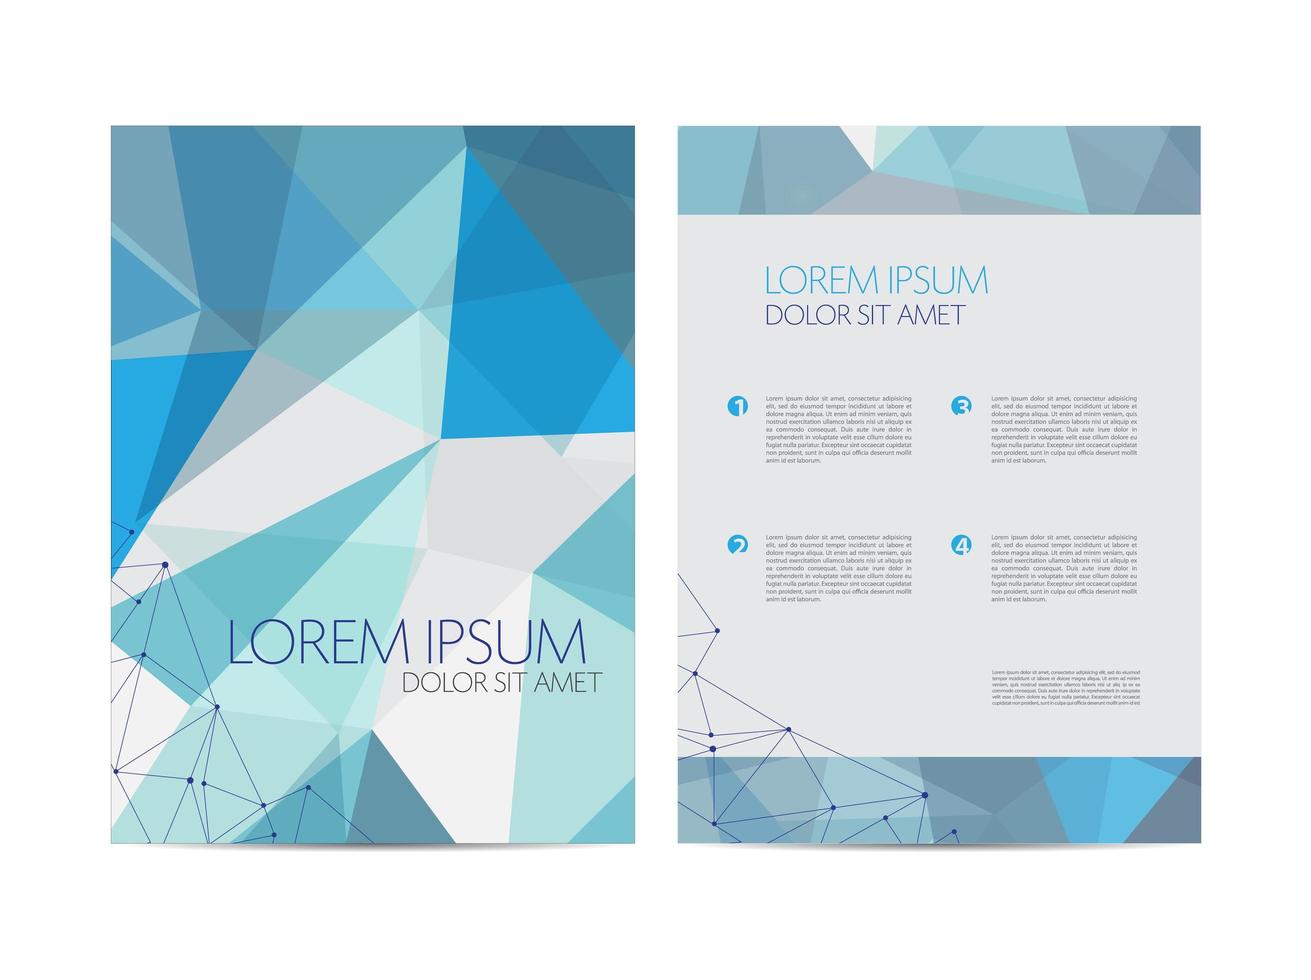 modèles de conception de brochure flyer moderne abstract vector